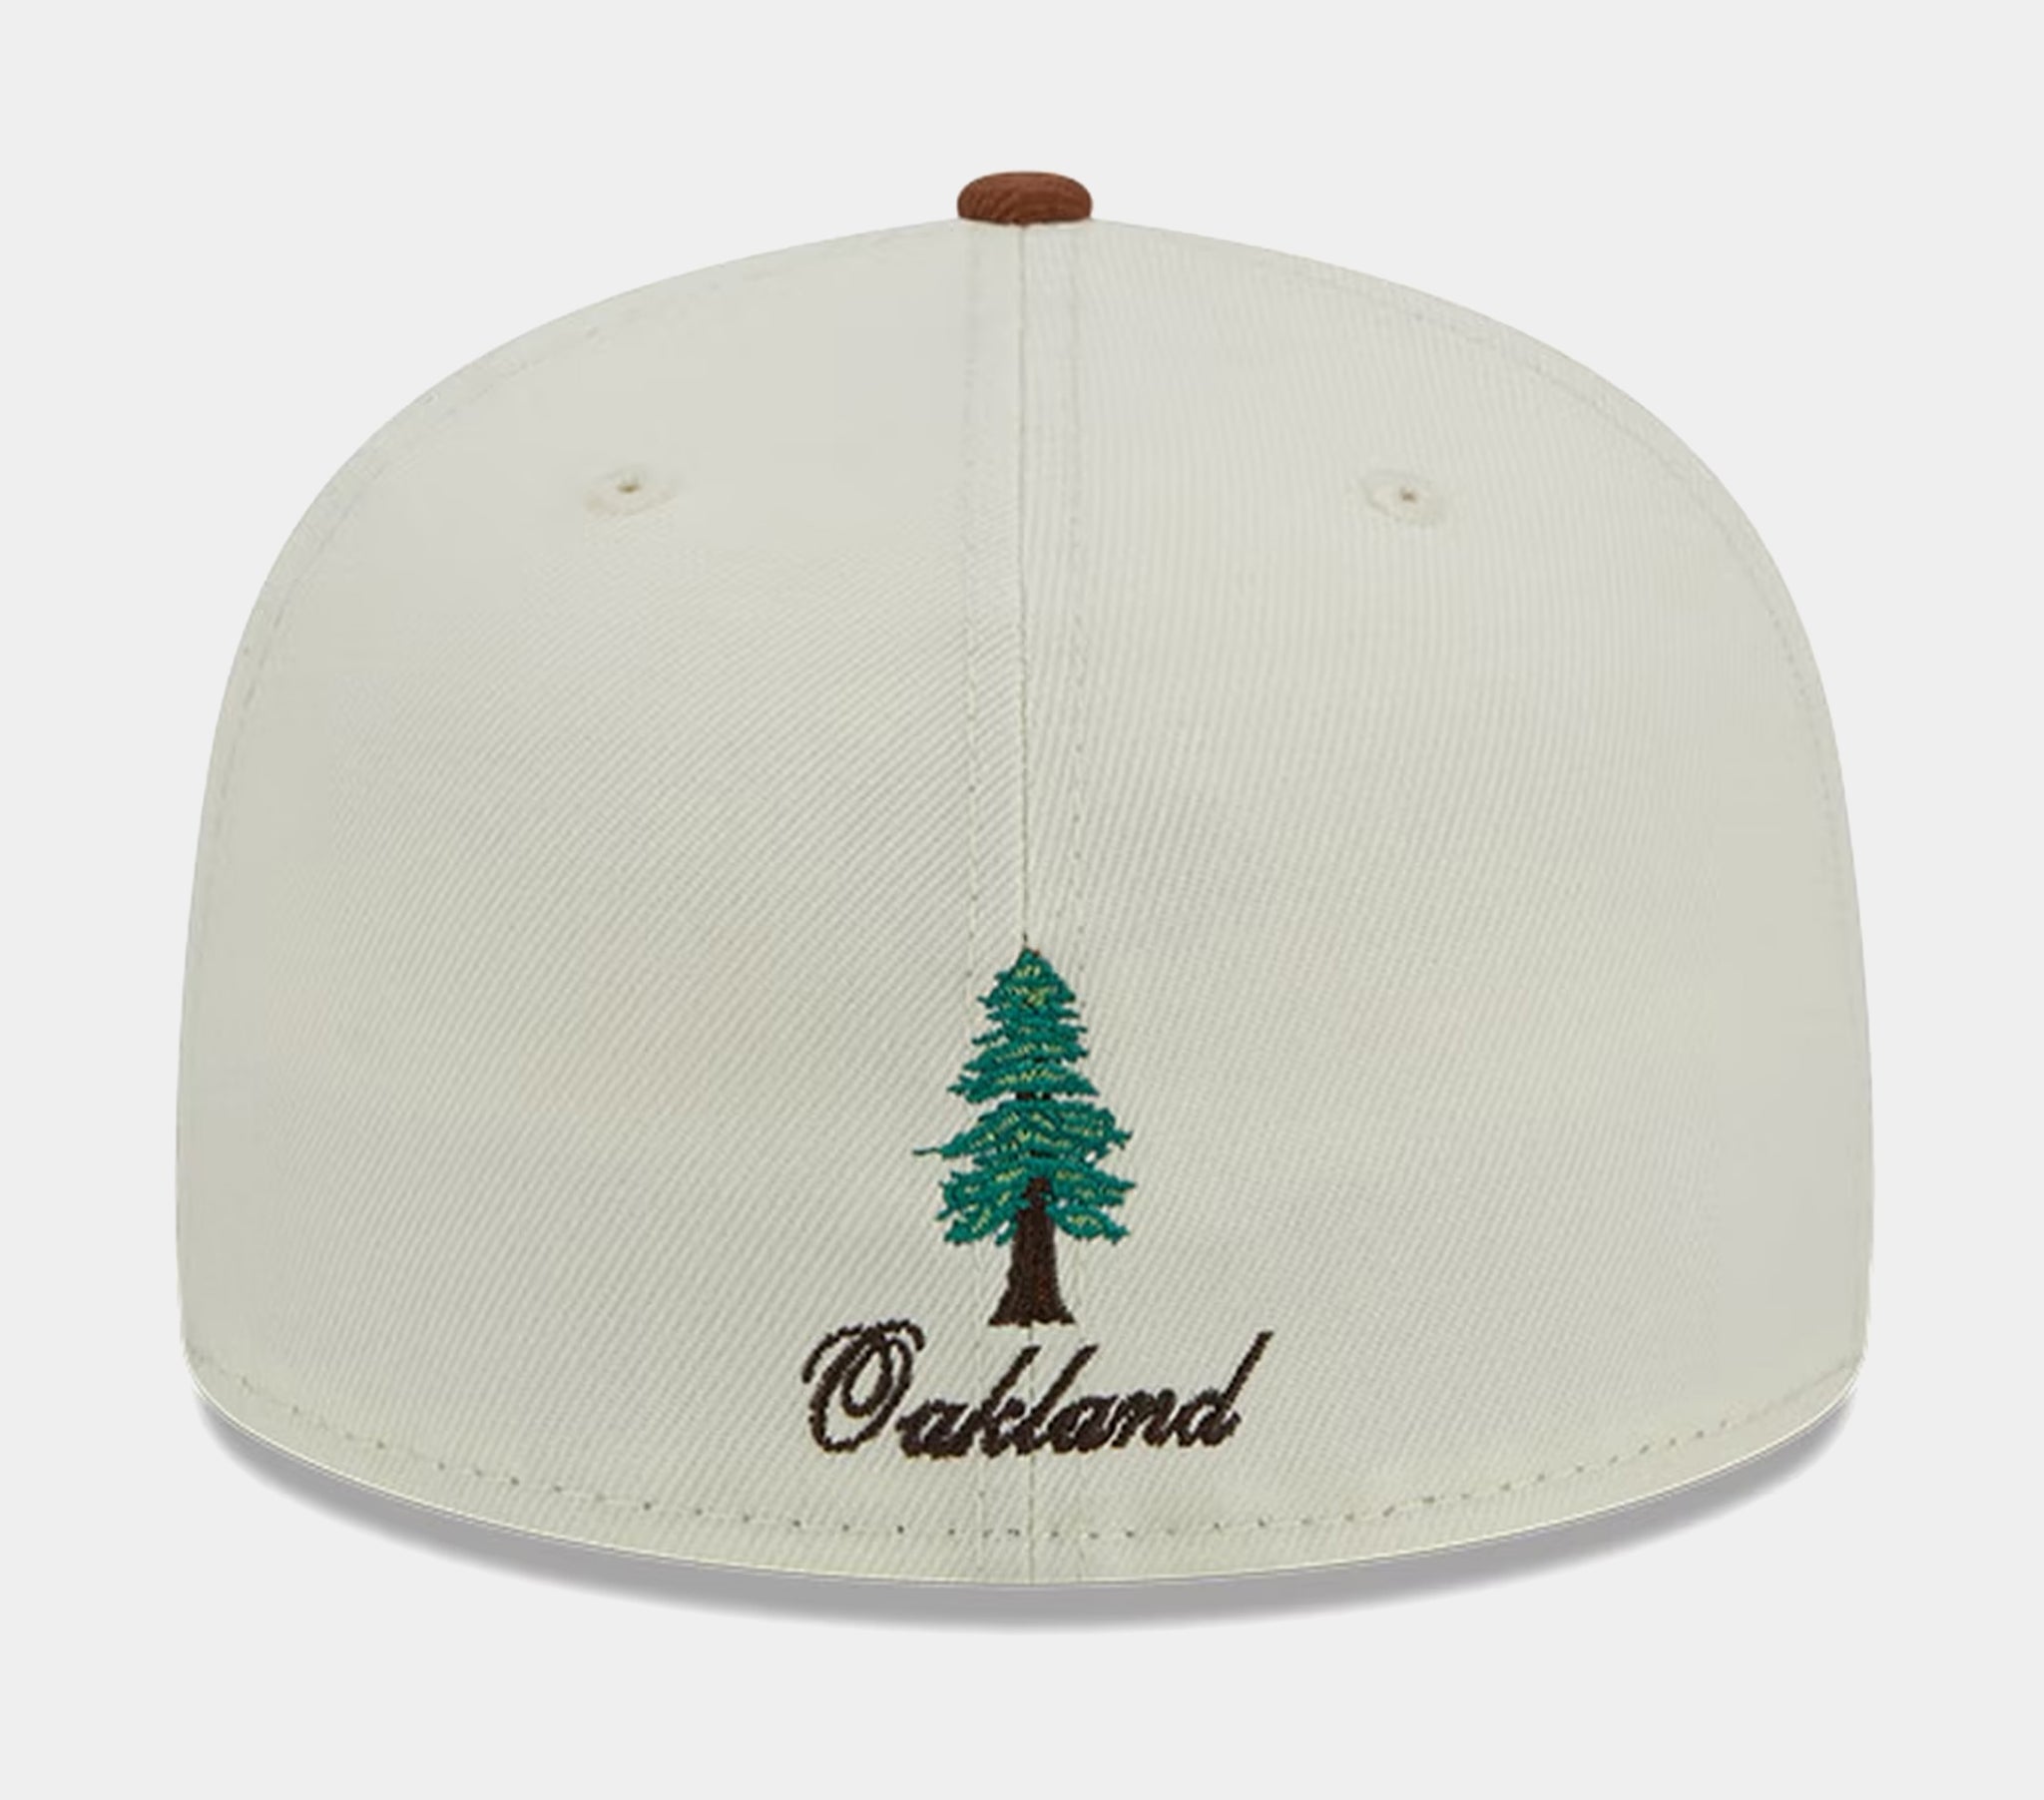 Official Oakland Athletics Hats, A's Cap, A's Hats, Beanies